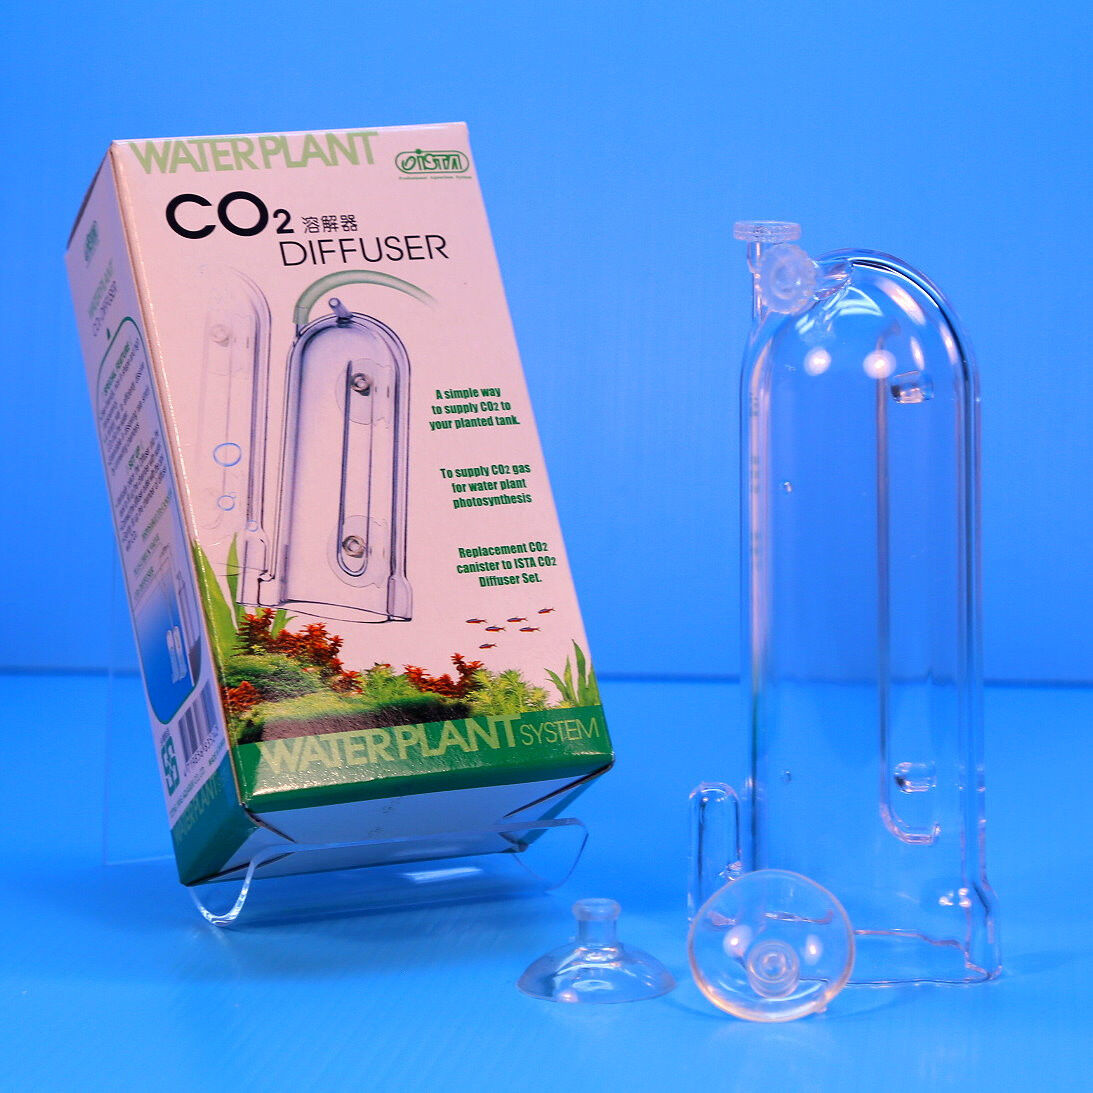 Aquarium CO2 diffuser for DIY yeast bottles disposable co2 cartridge plant tank